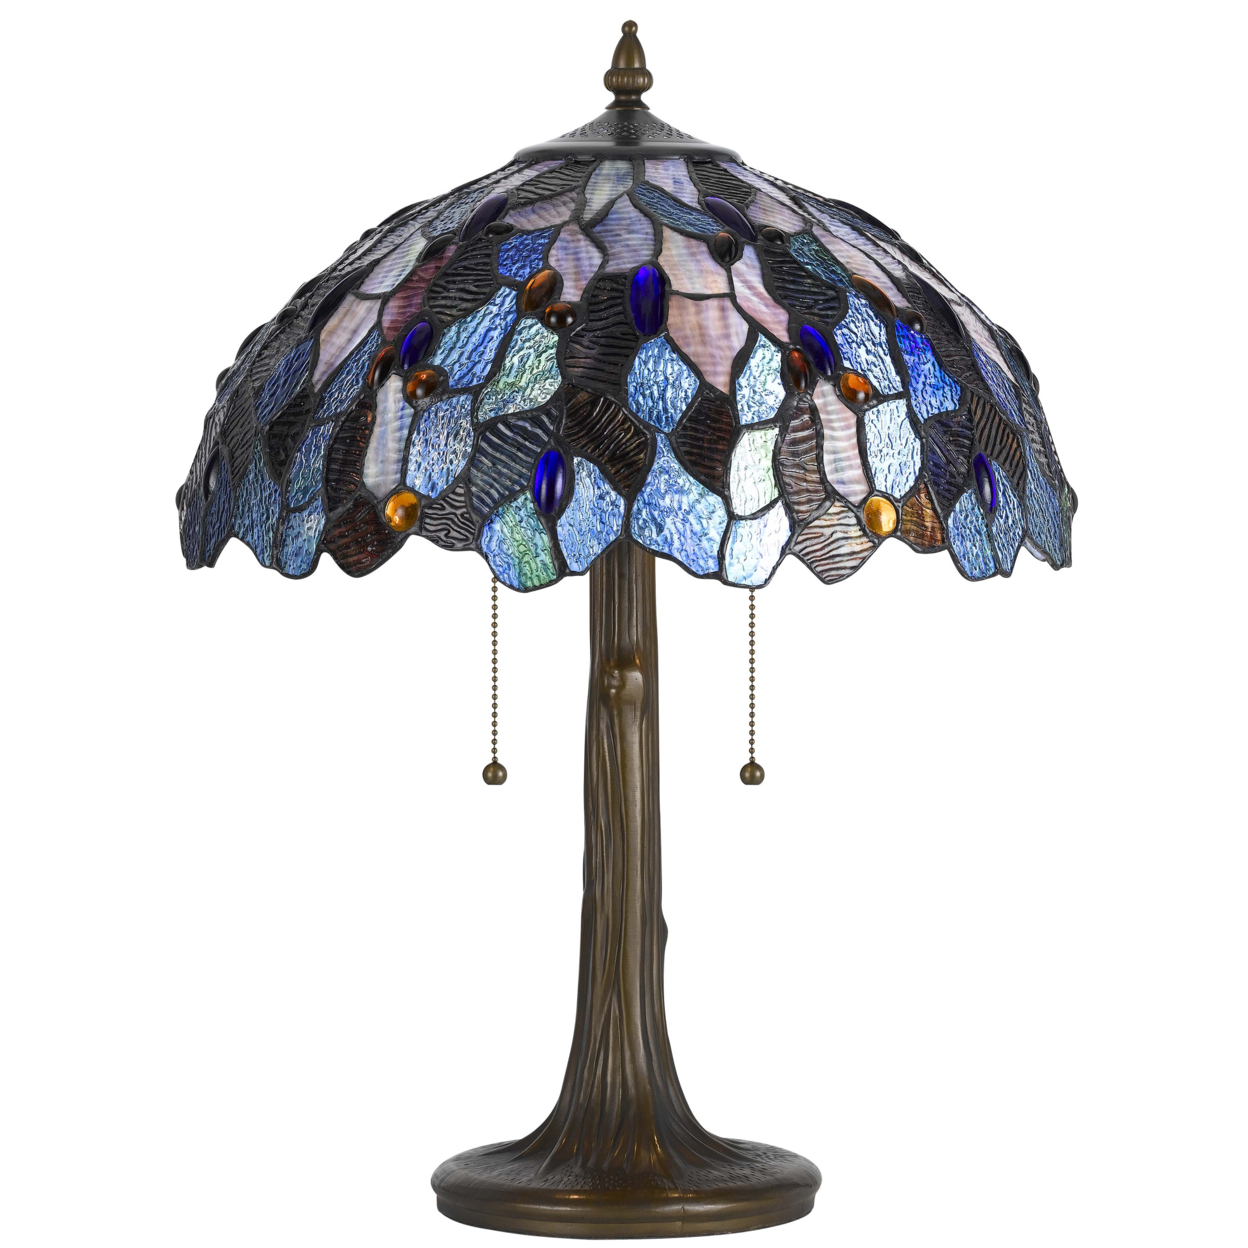 2 Bulb Tiffany Floor Lamp With Mosaic Design Shade, Multicolor- Saltoro Sherpi